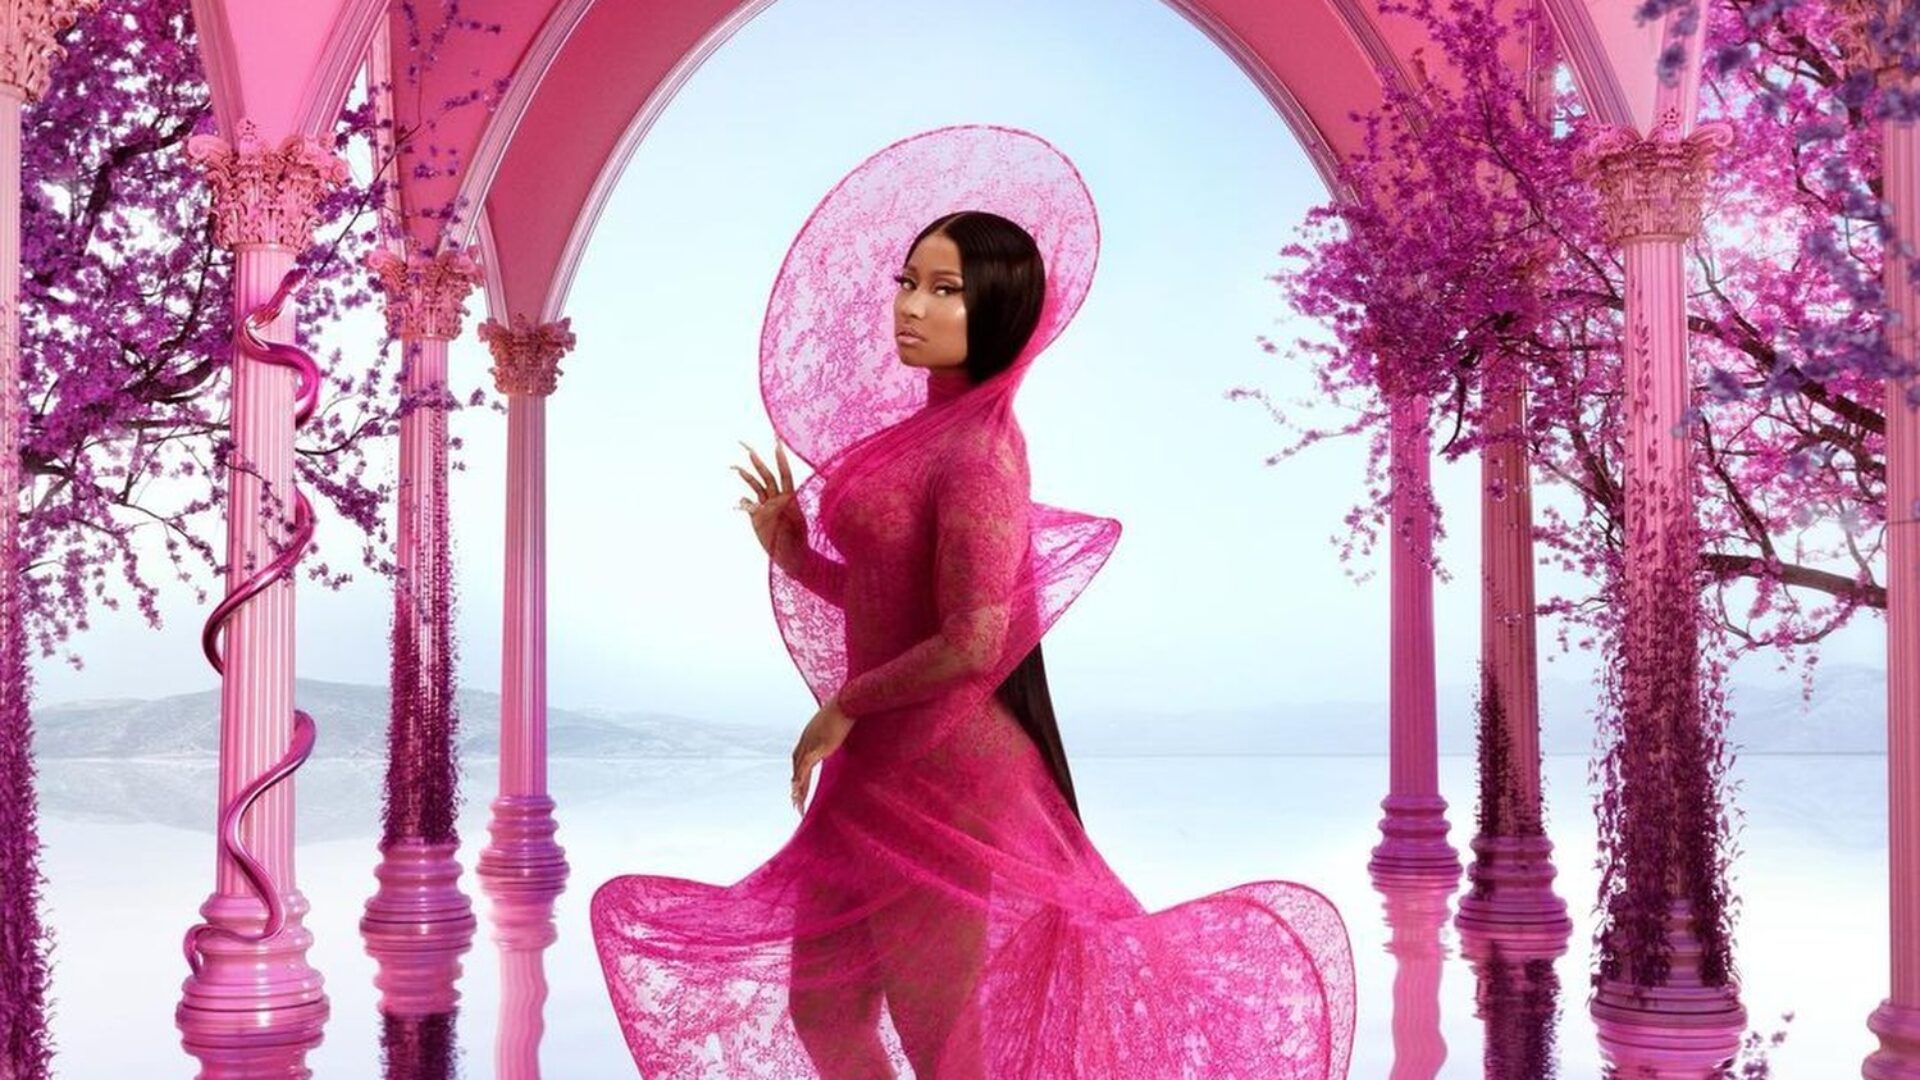 Billie Eilish Sample on Nicki Minaj's 'Pink Friday 2' Album